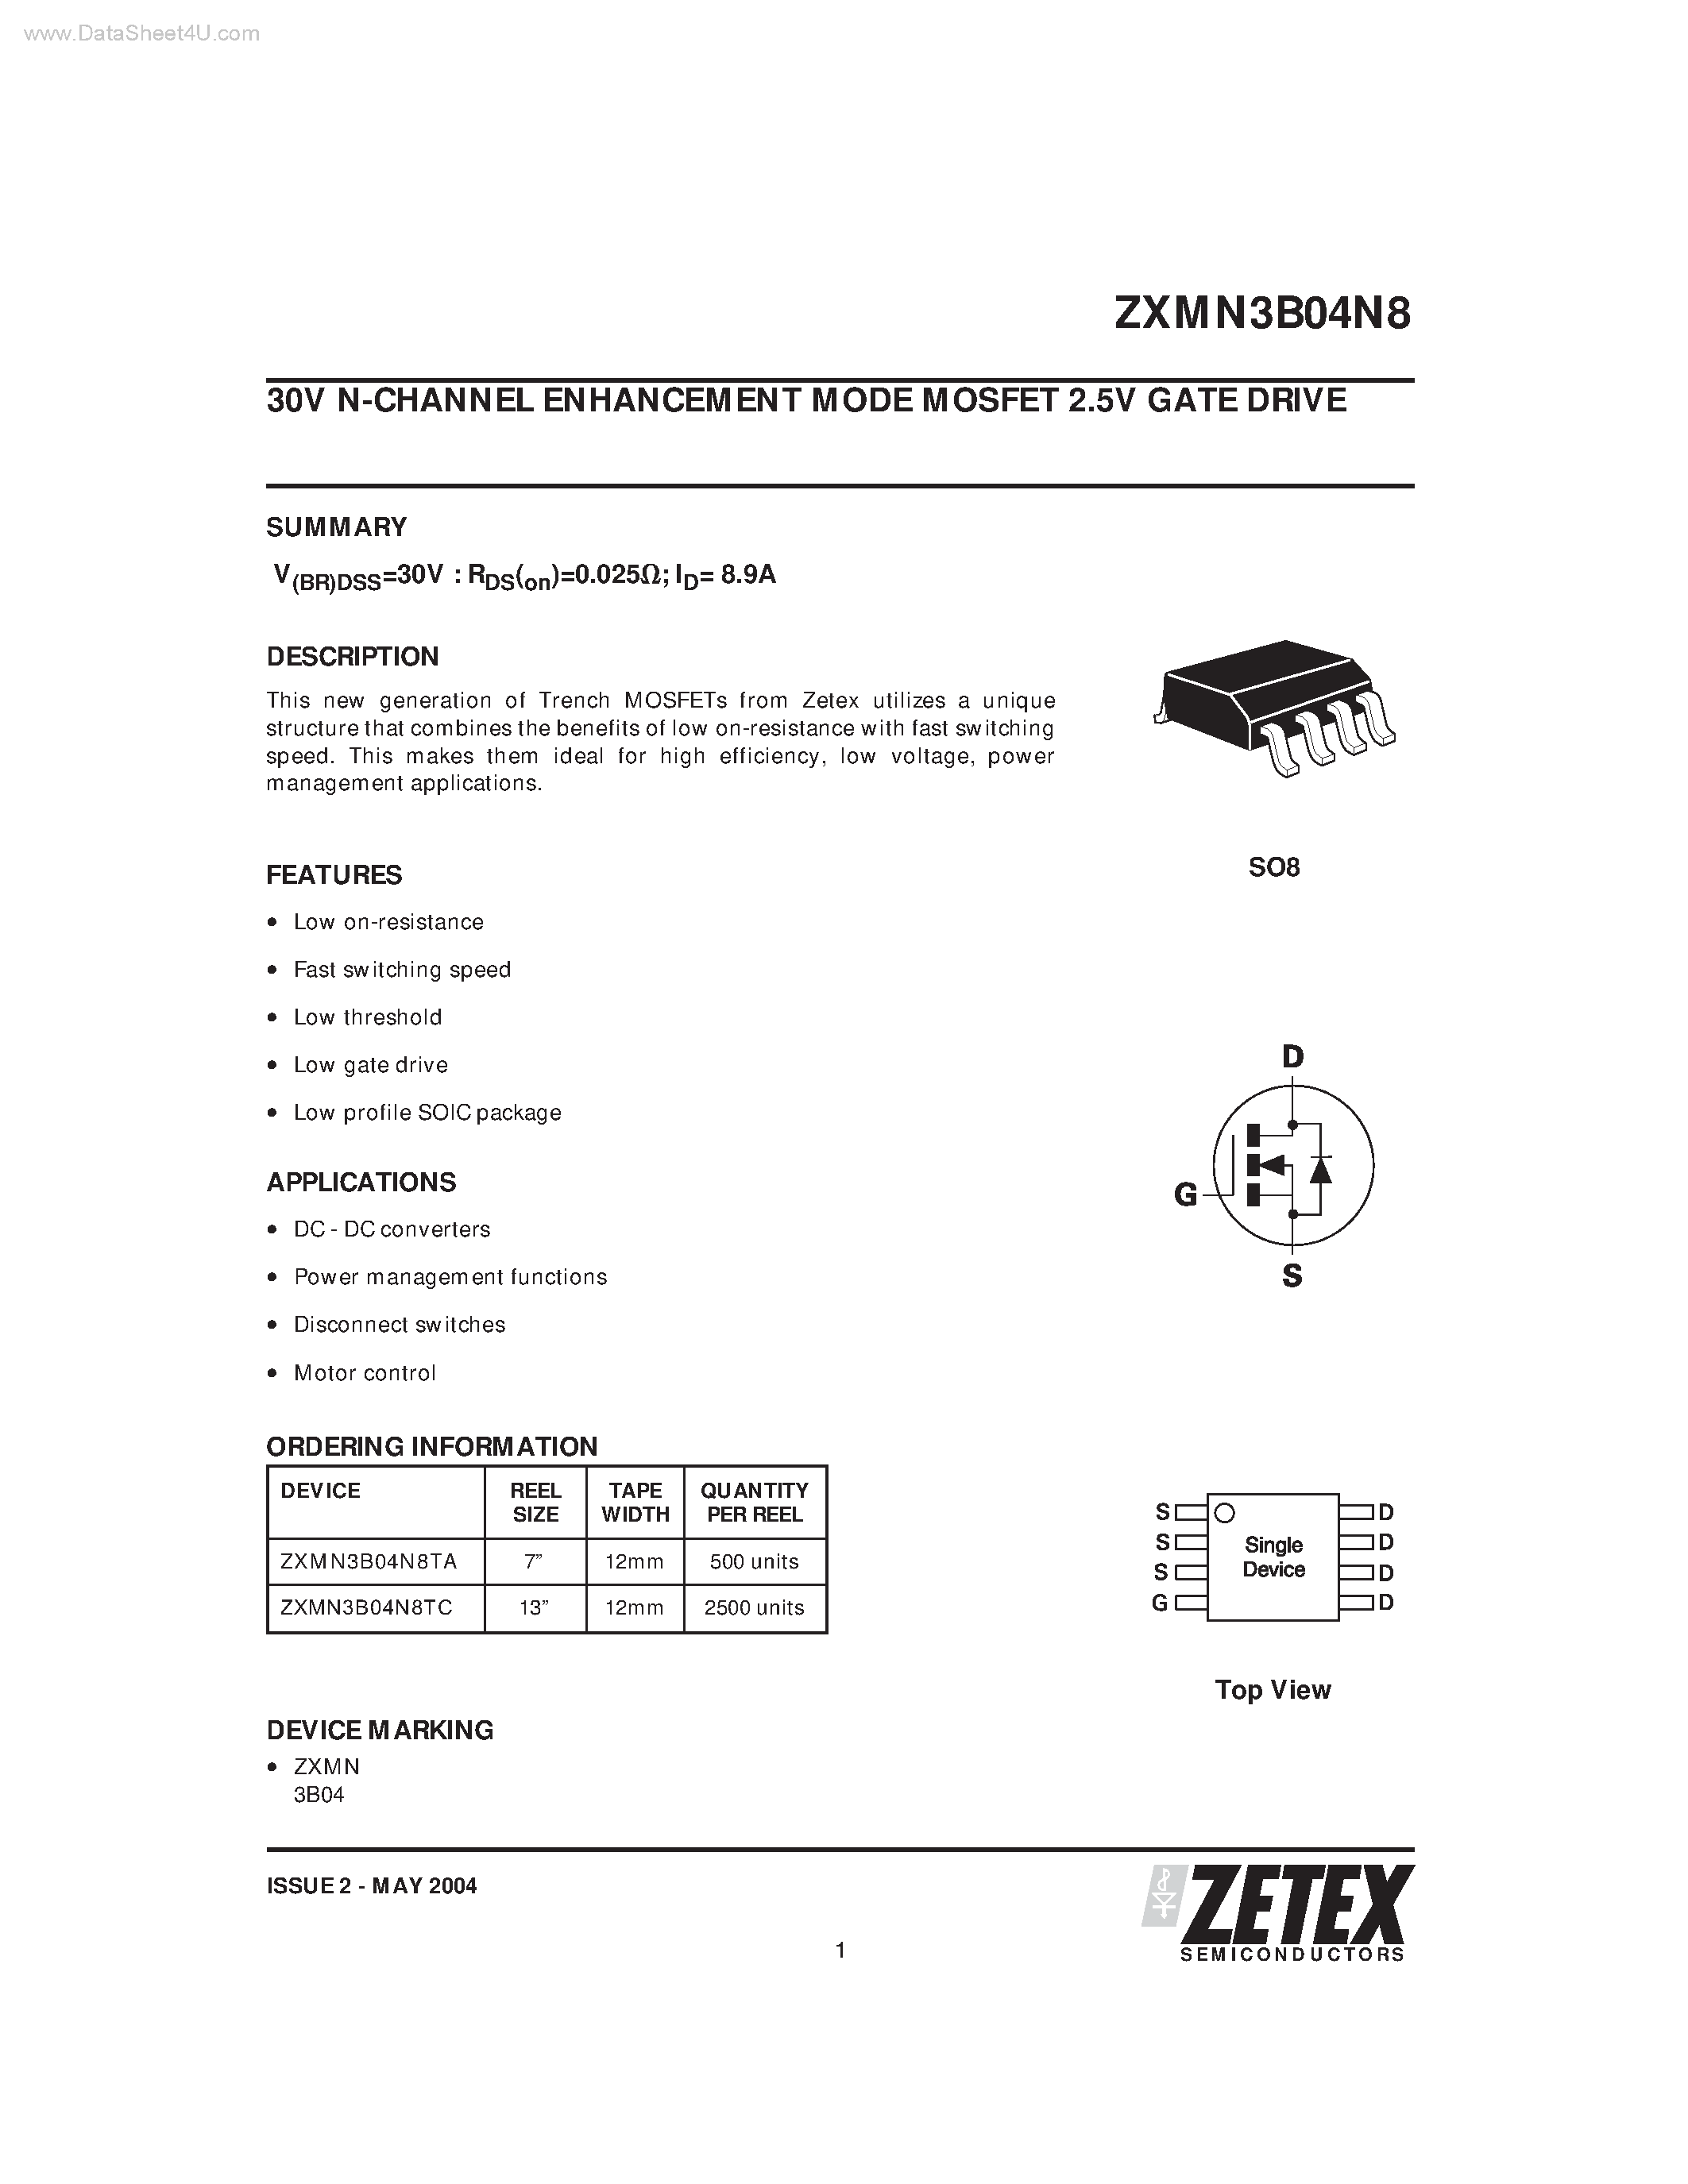 Даташит ZXMN3B04N8 - N-CHANNEL ENHANCEMENT MODE MOSFET 2.5V GATE DRIVE страница 1